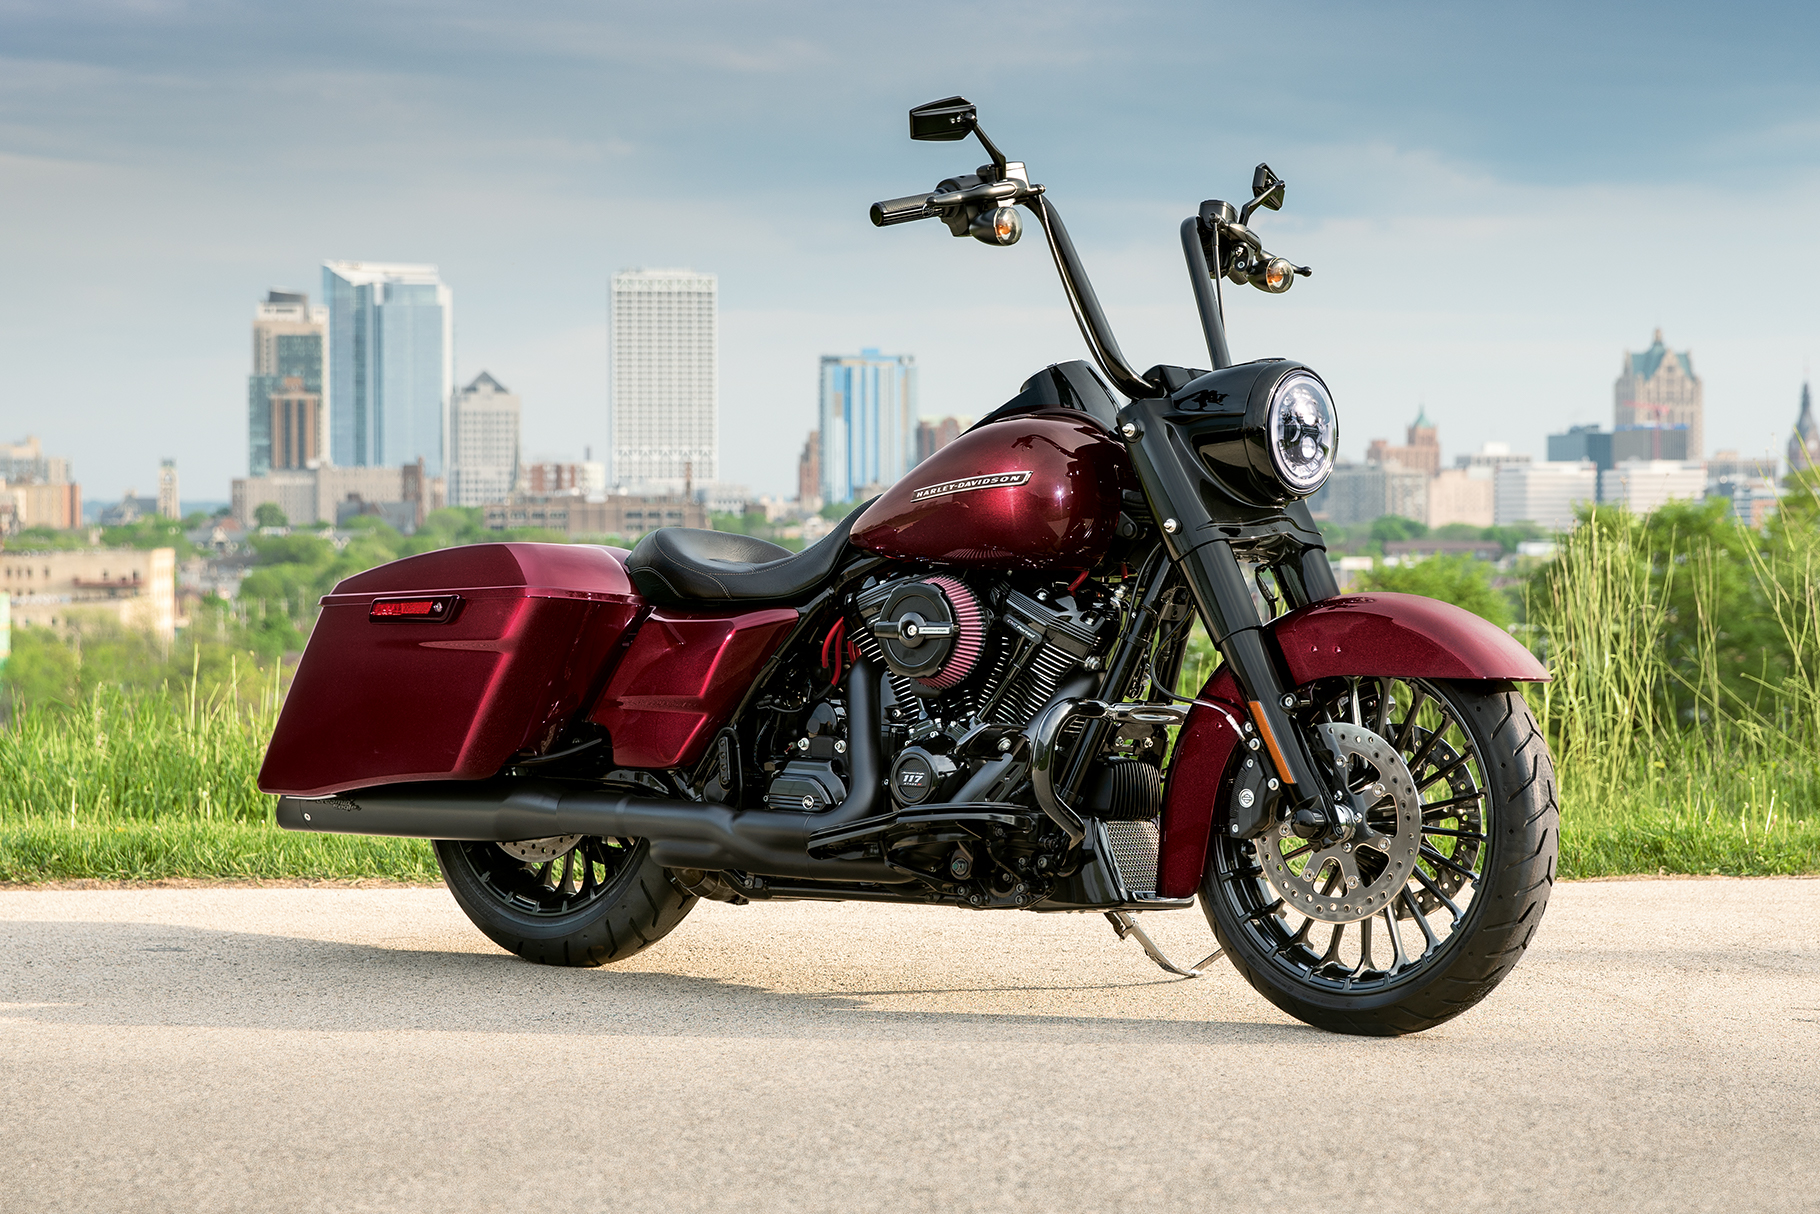 2019 Road King Special Motorcycle | Harley-Davidson ...